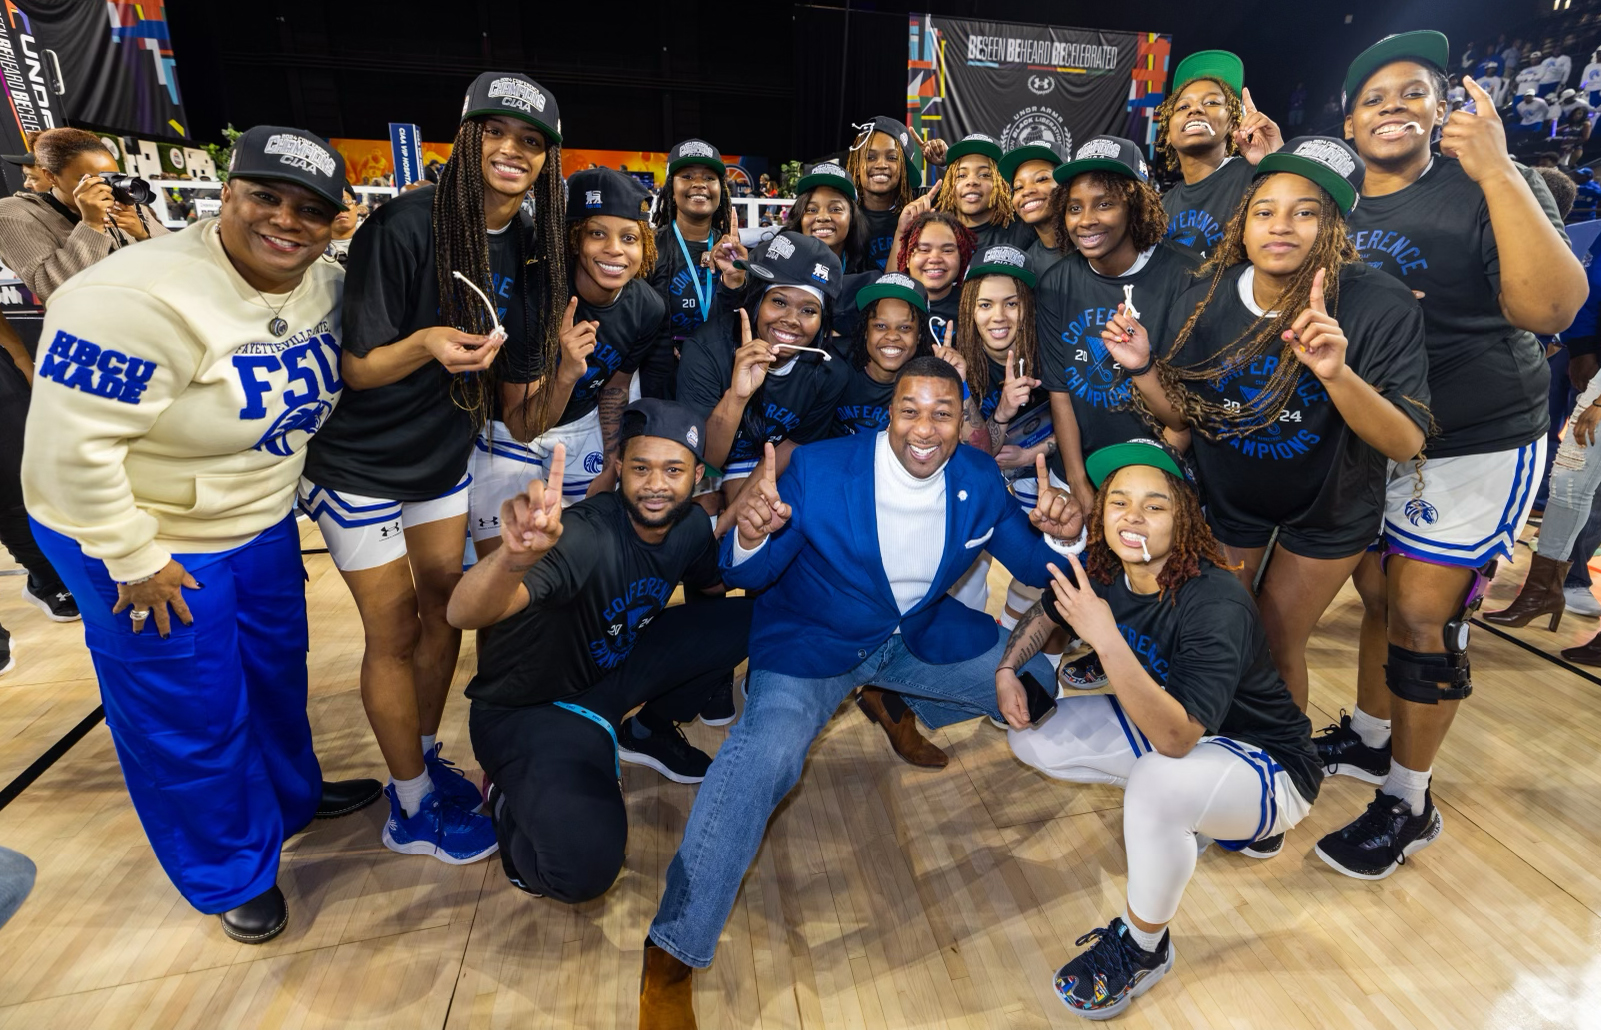 Group photo of the FSU women's basketball team and Chancellor Darrell Allison